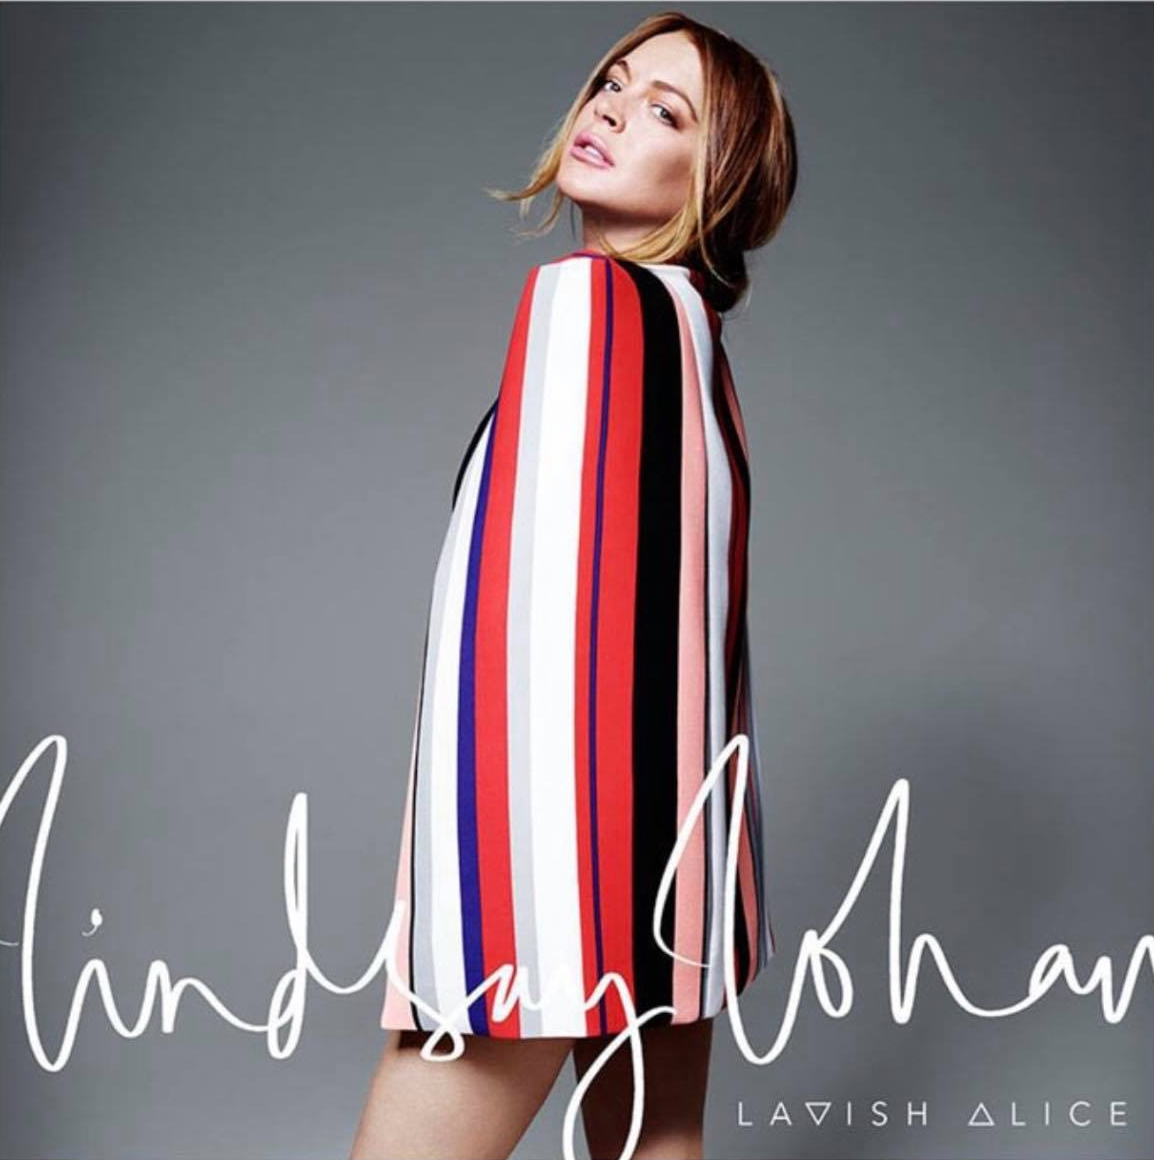 Lindsay Lohan’s Best Fashion Moments - V Magazine